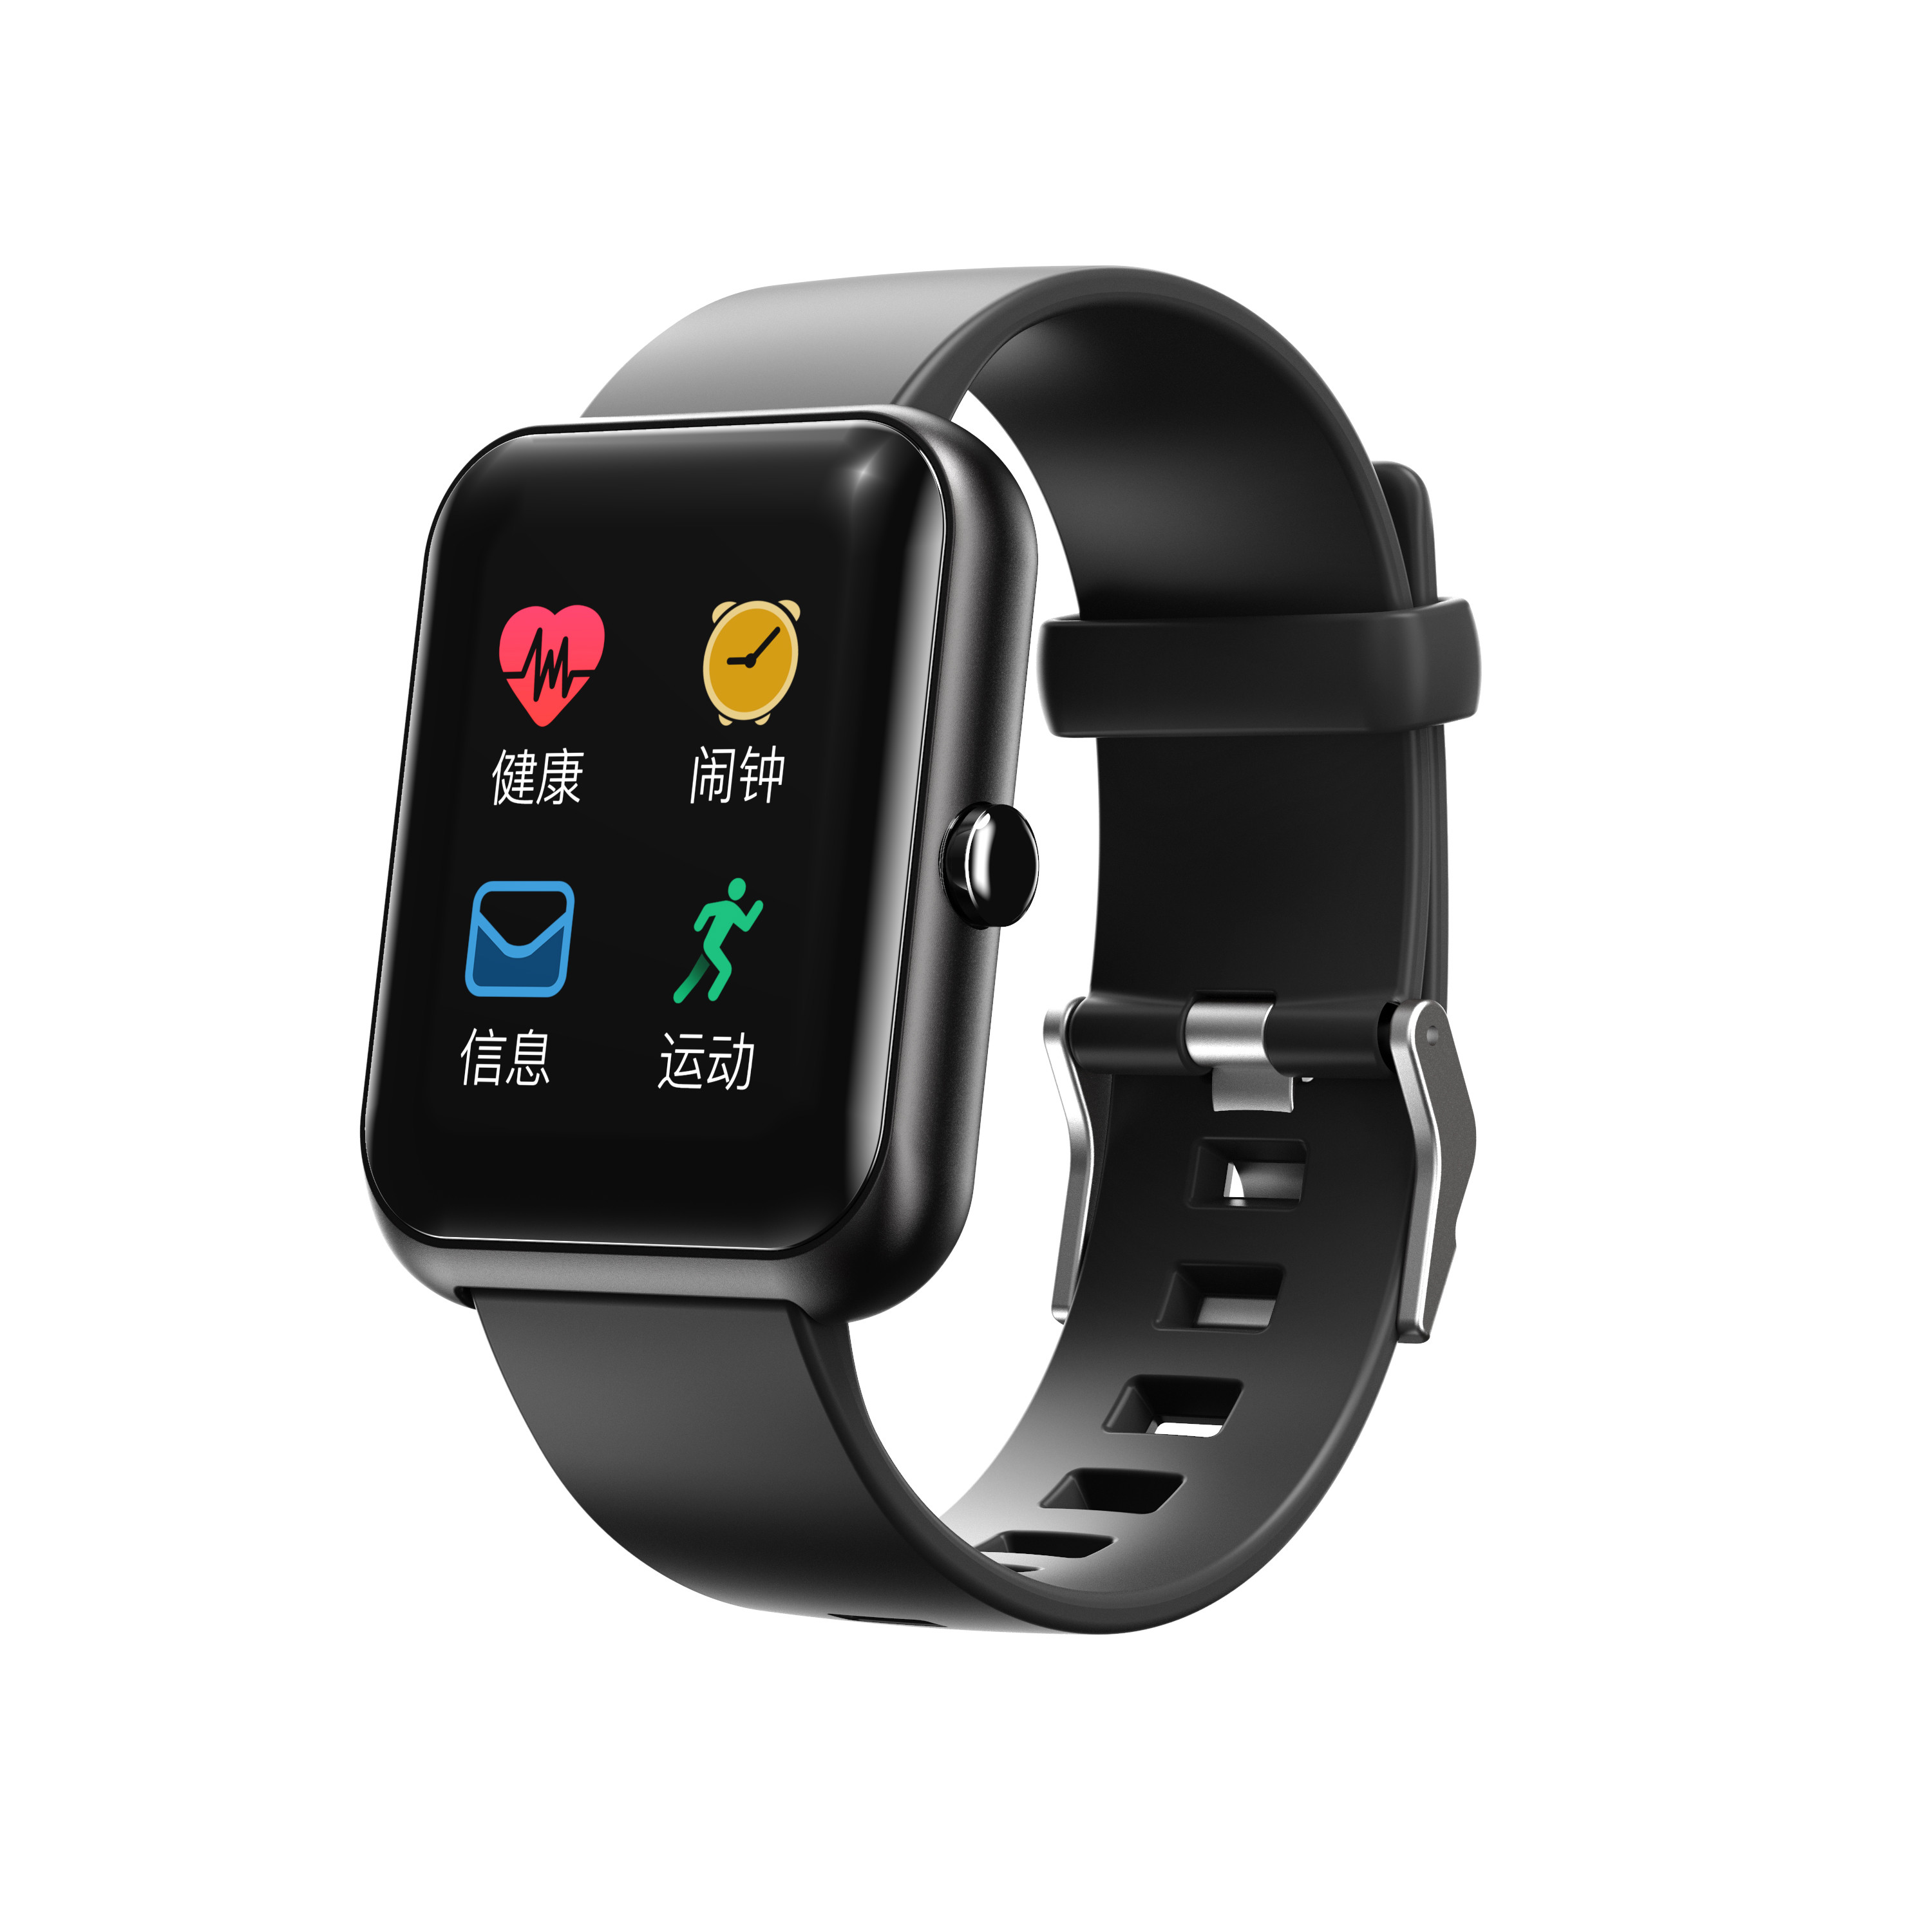  Health Reminder 170mAh UN38.3 Fitness Tracker Smartwatch TELEC Manufactures